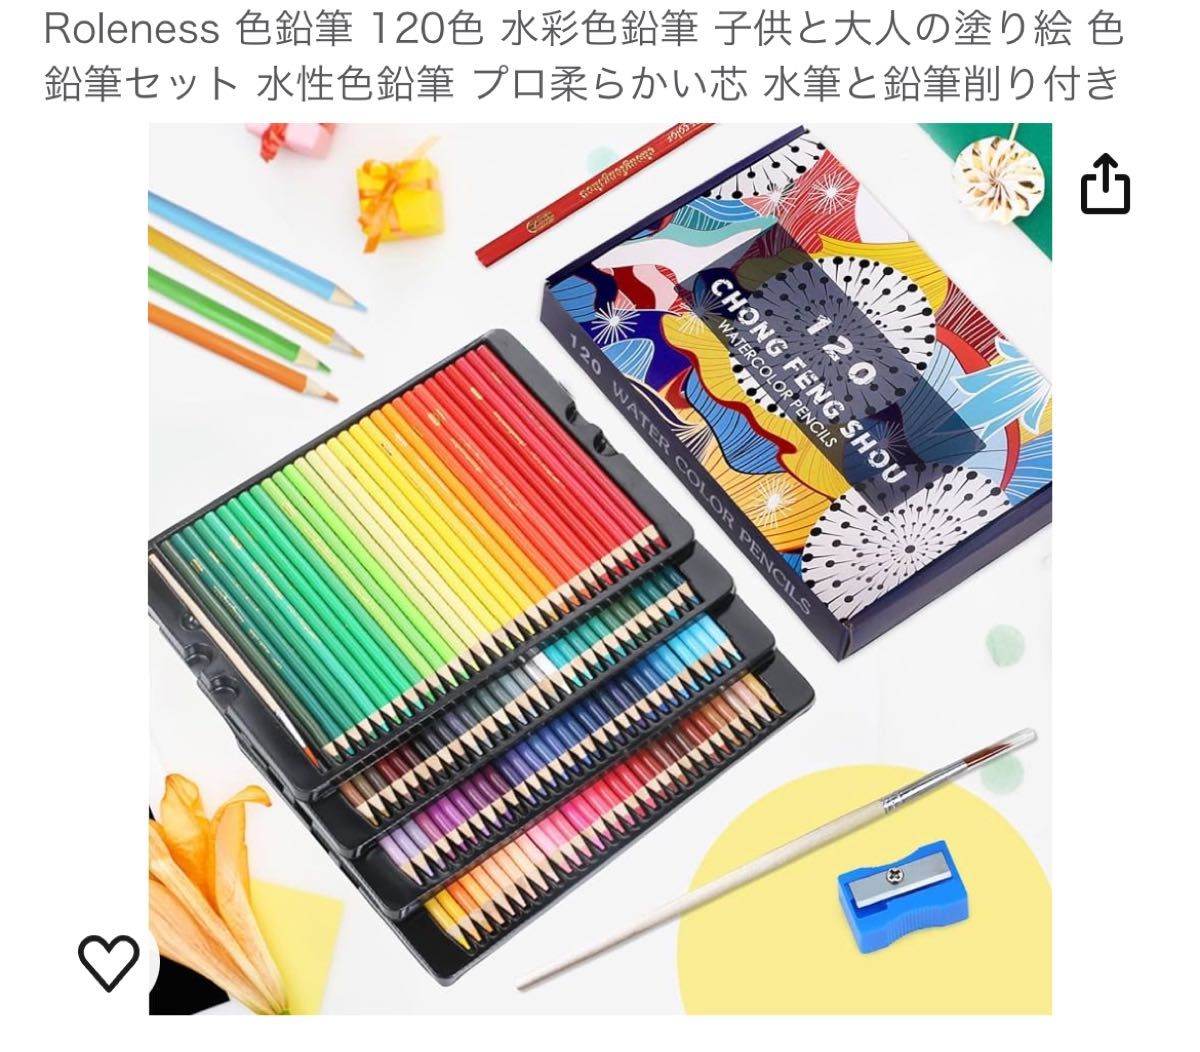 Roleness 色鉛筆 120色 水彩色鉛筆 子供と大人の塗り絵 色鉛筆セット 水性色鉛筆 プロ柔らかい芯 水筆と鉛筆削り付き